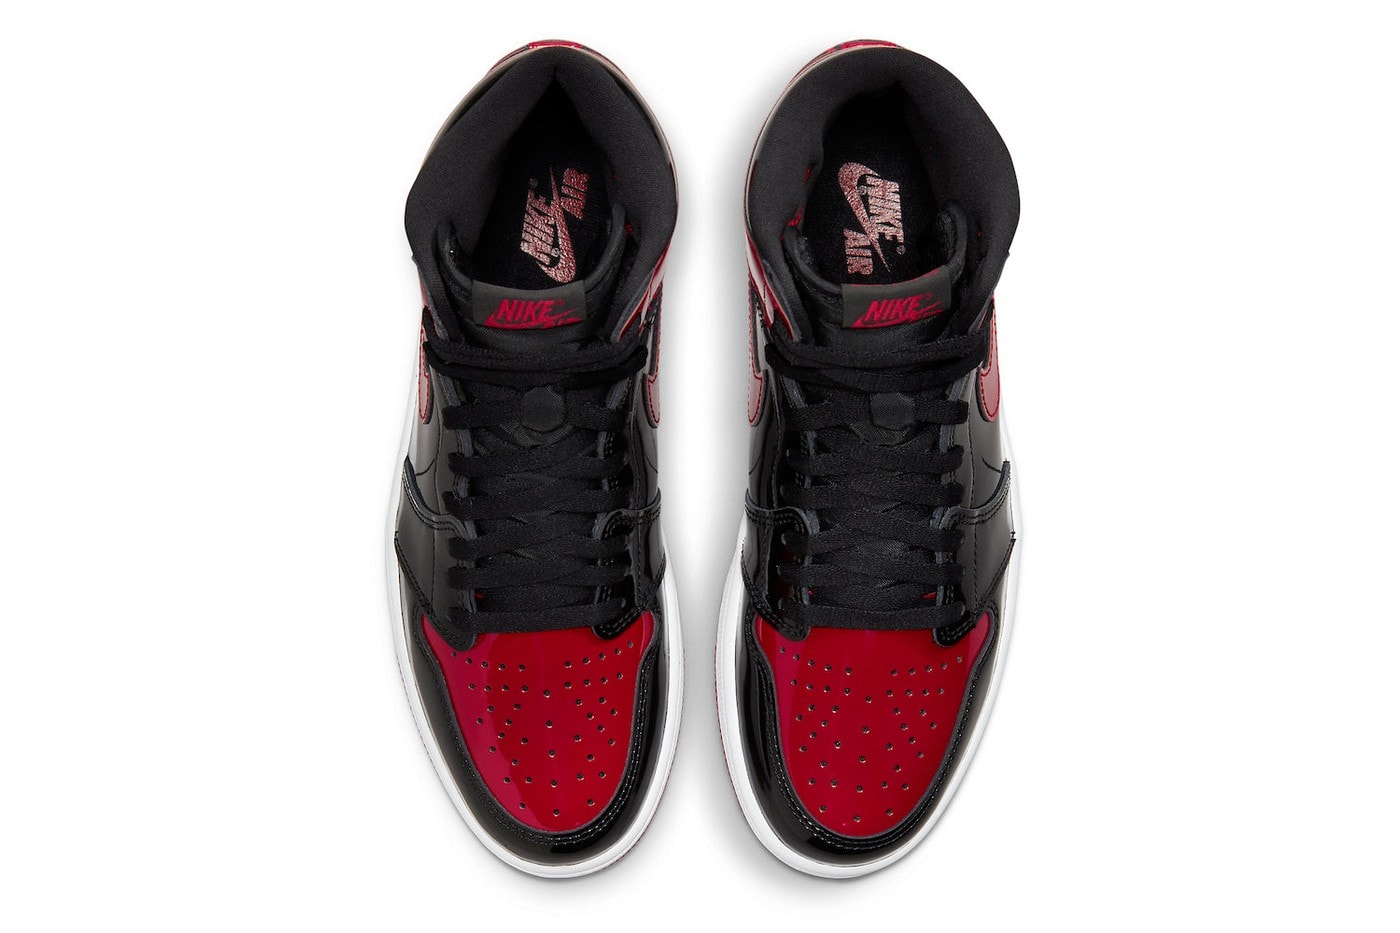 Nike Air Jordan 1 High OG Patent Bred Red Black Upper Toebox Shoelaces